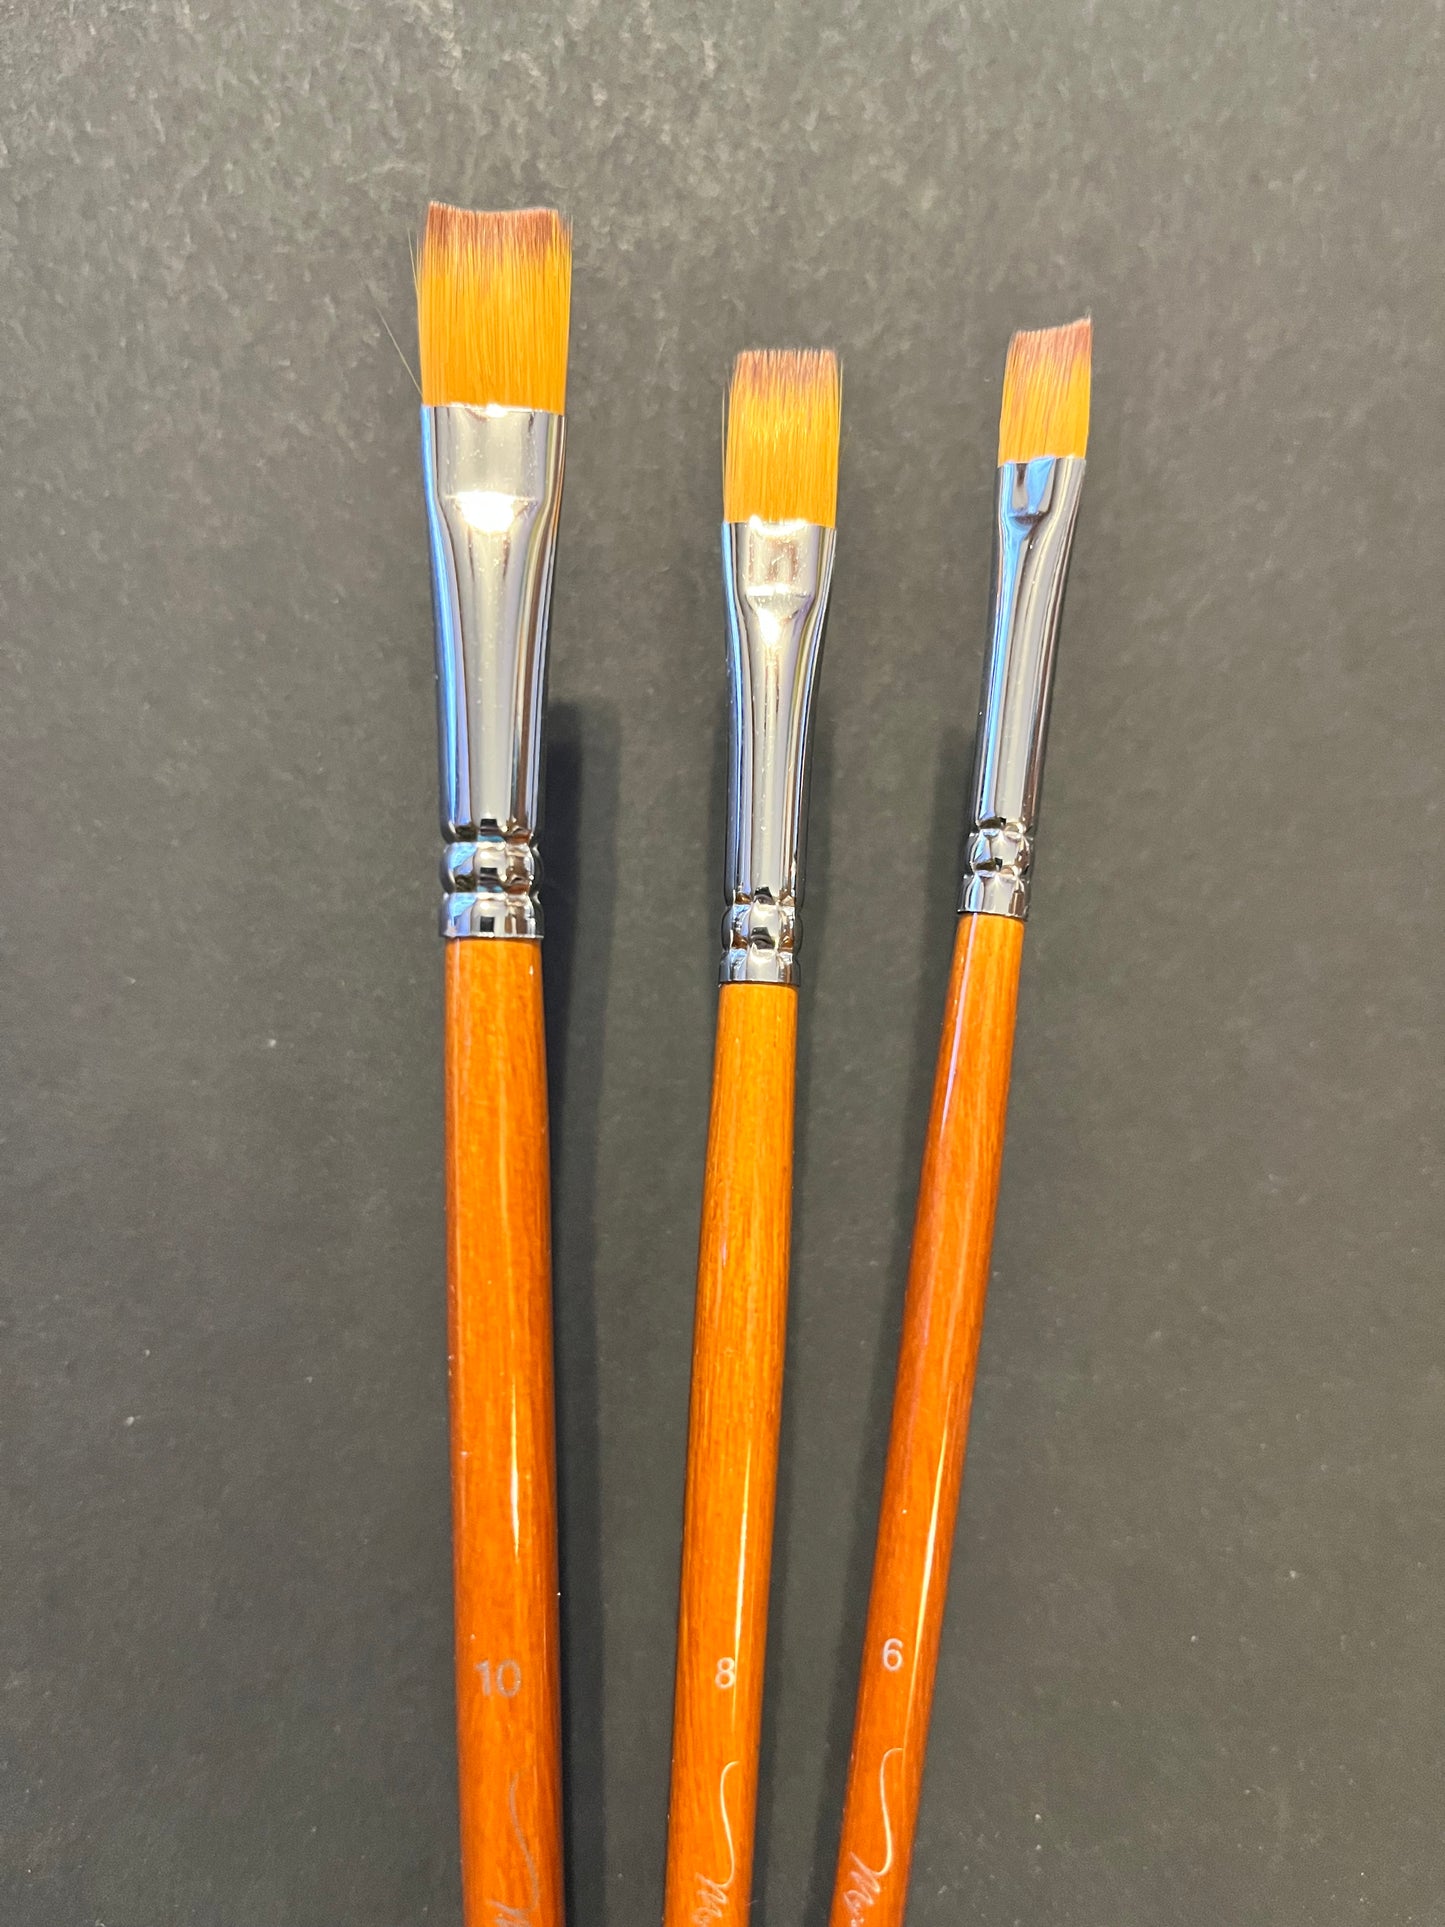 Mojove art brushes, sizes 6, 8, or 10